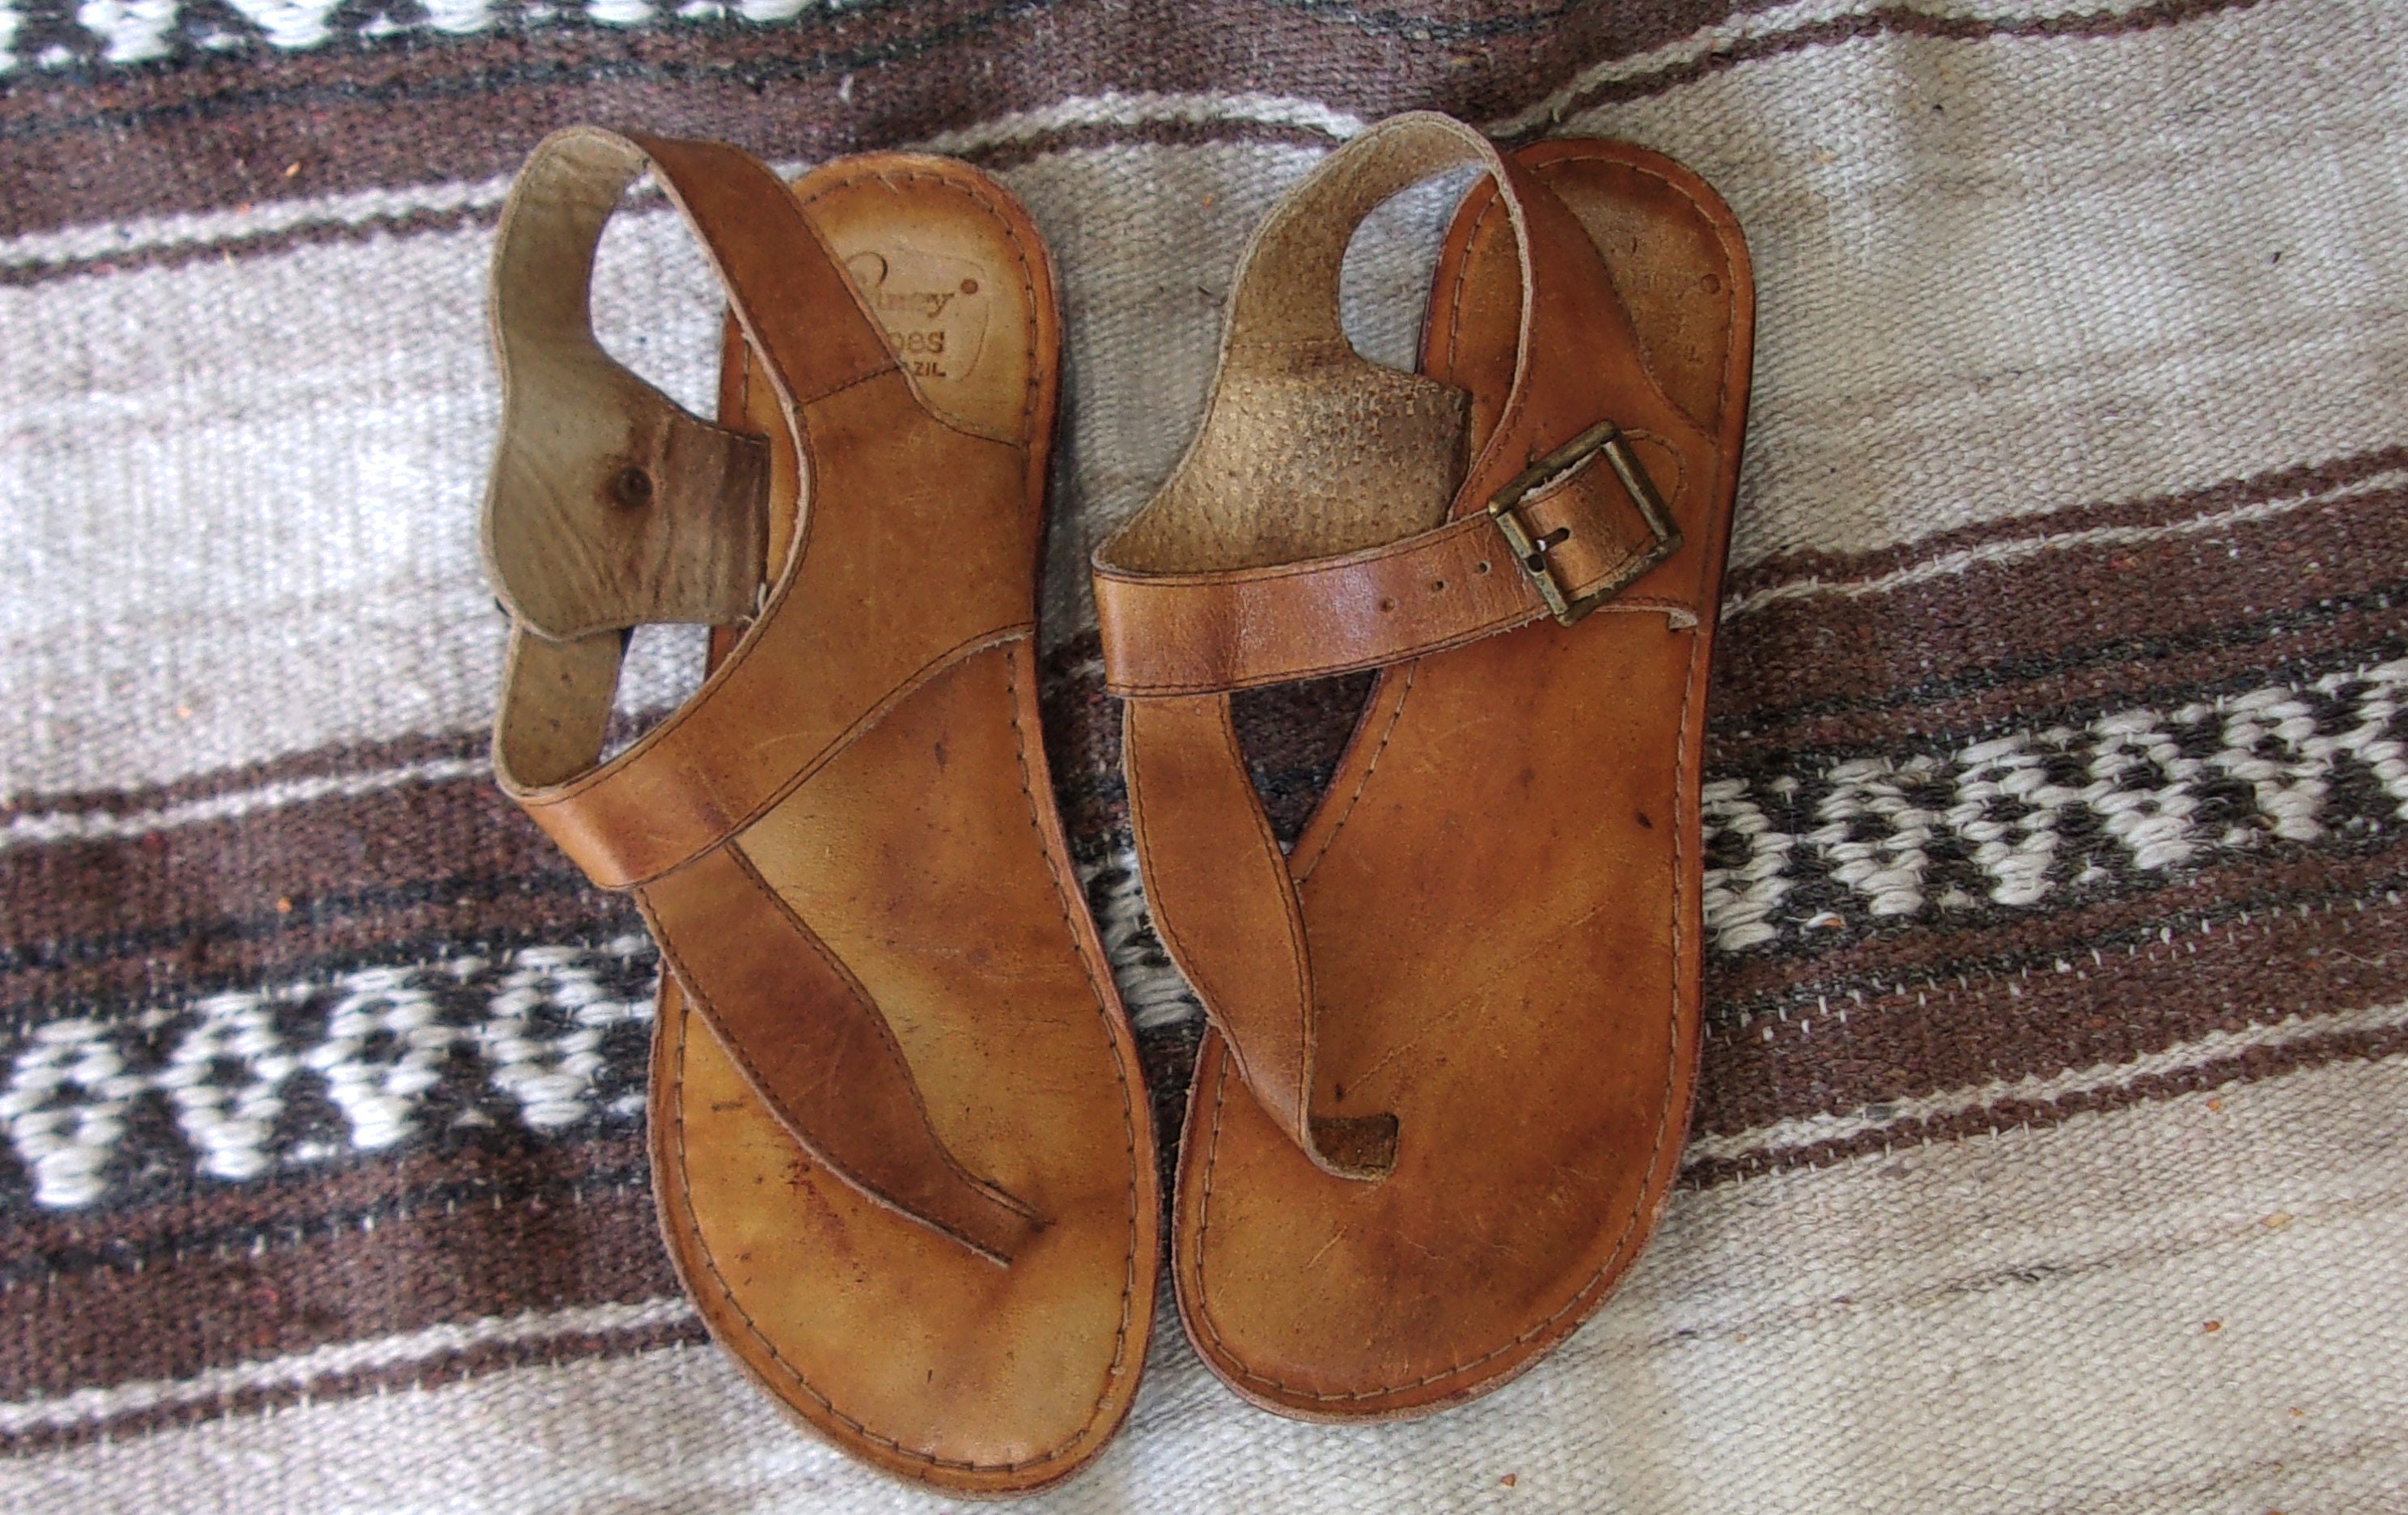  70s  Vintage Caramel Leather  Hippie Boho Shoes  by Kinney 